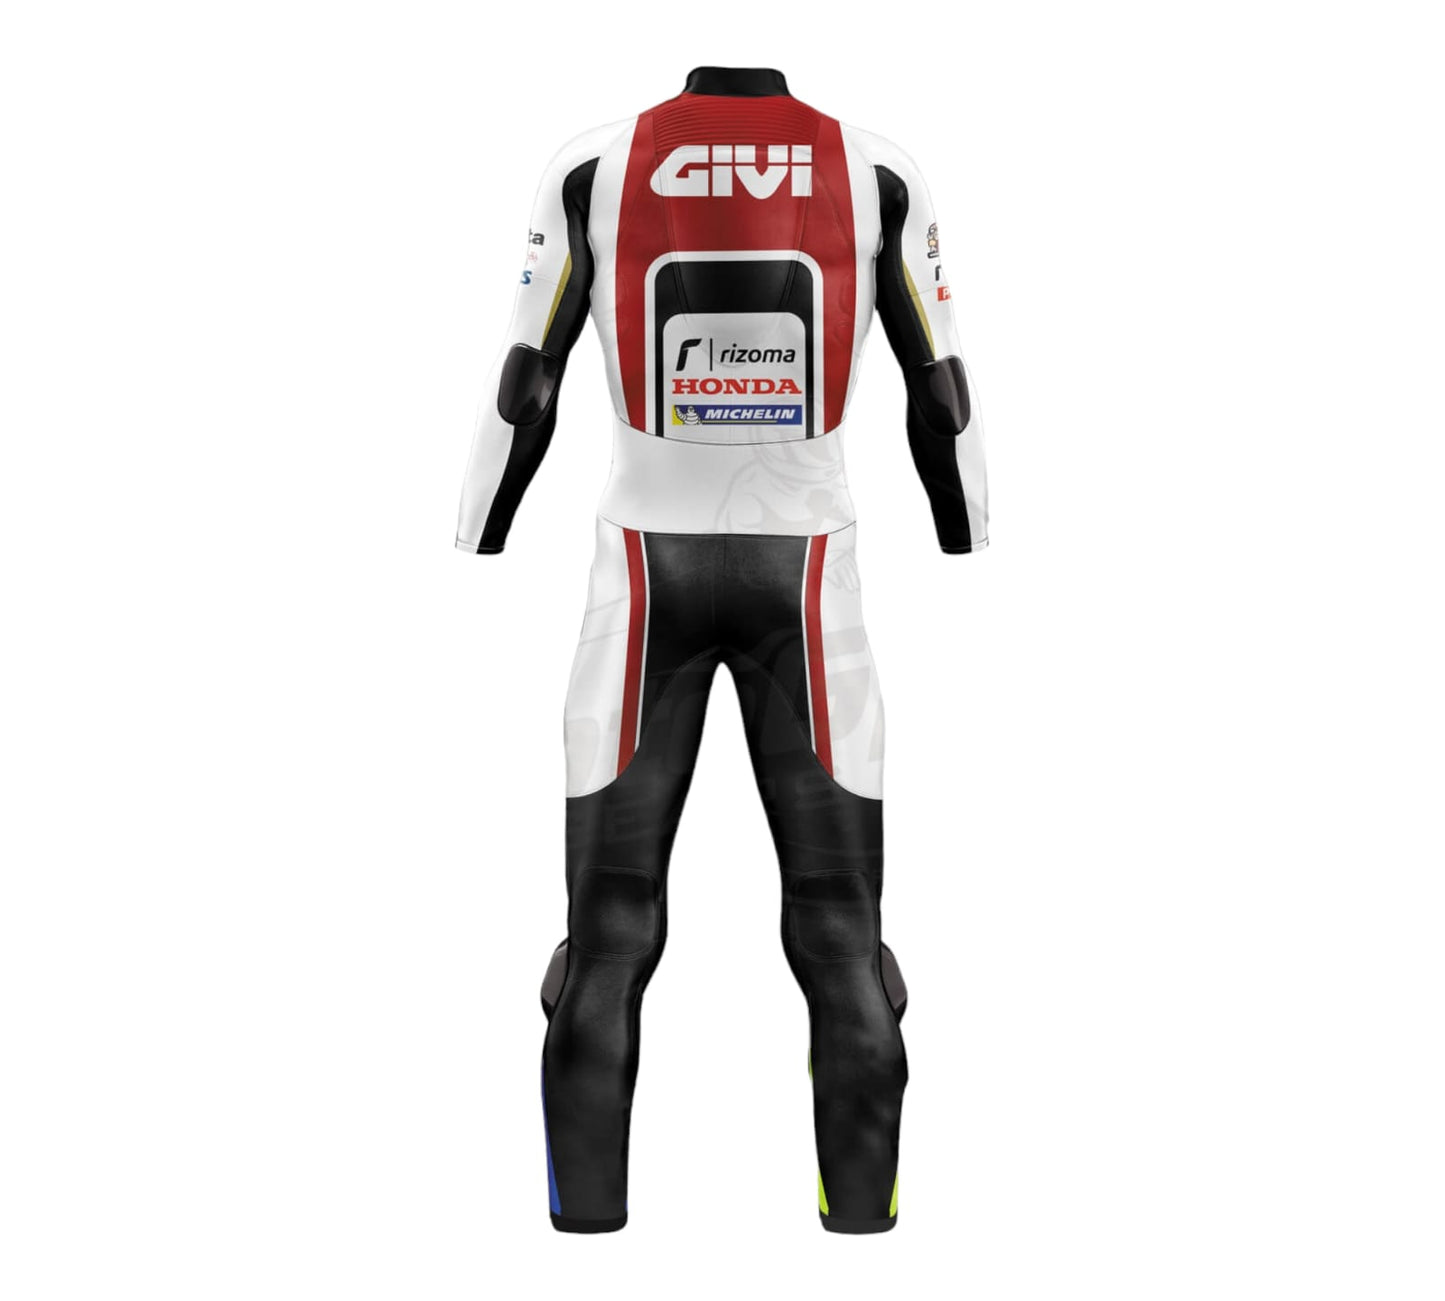 Honda Givi Cal Crutchlow 2017 Racing Suit